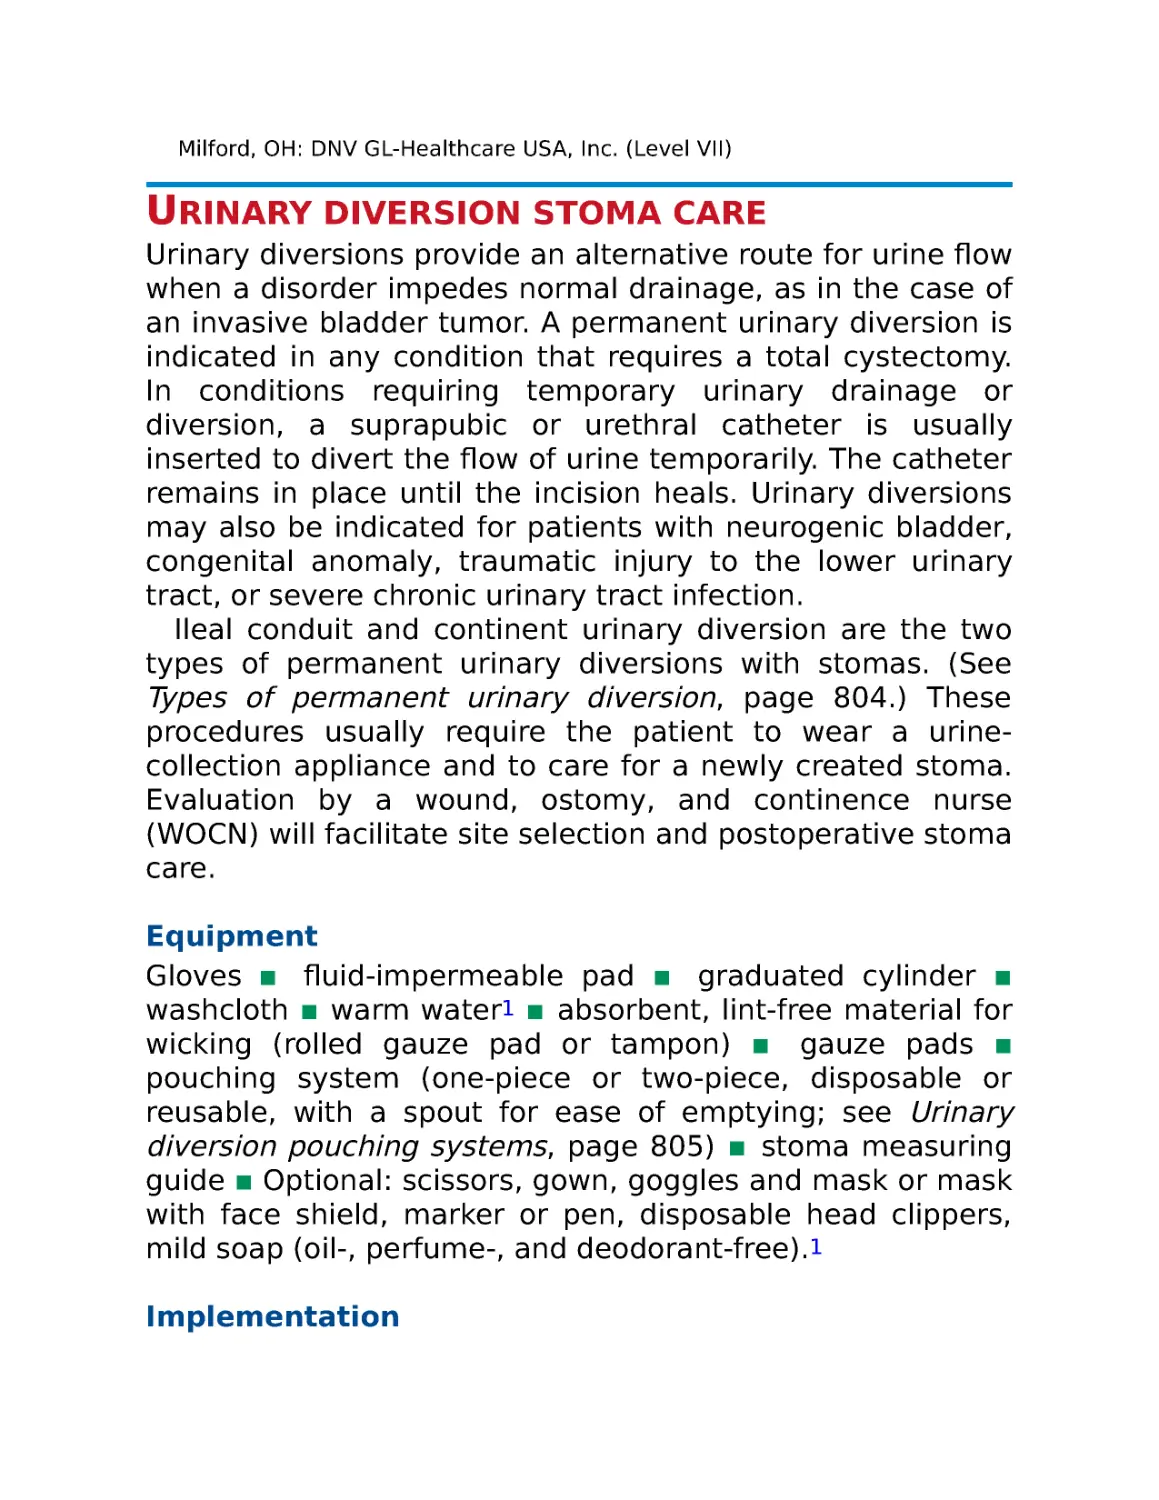 Urinary diversion stoma care